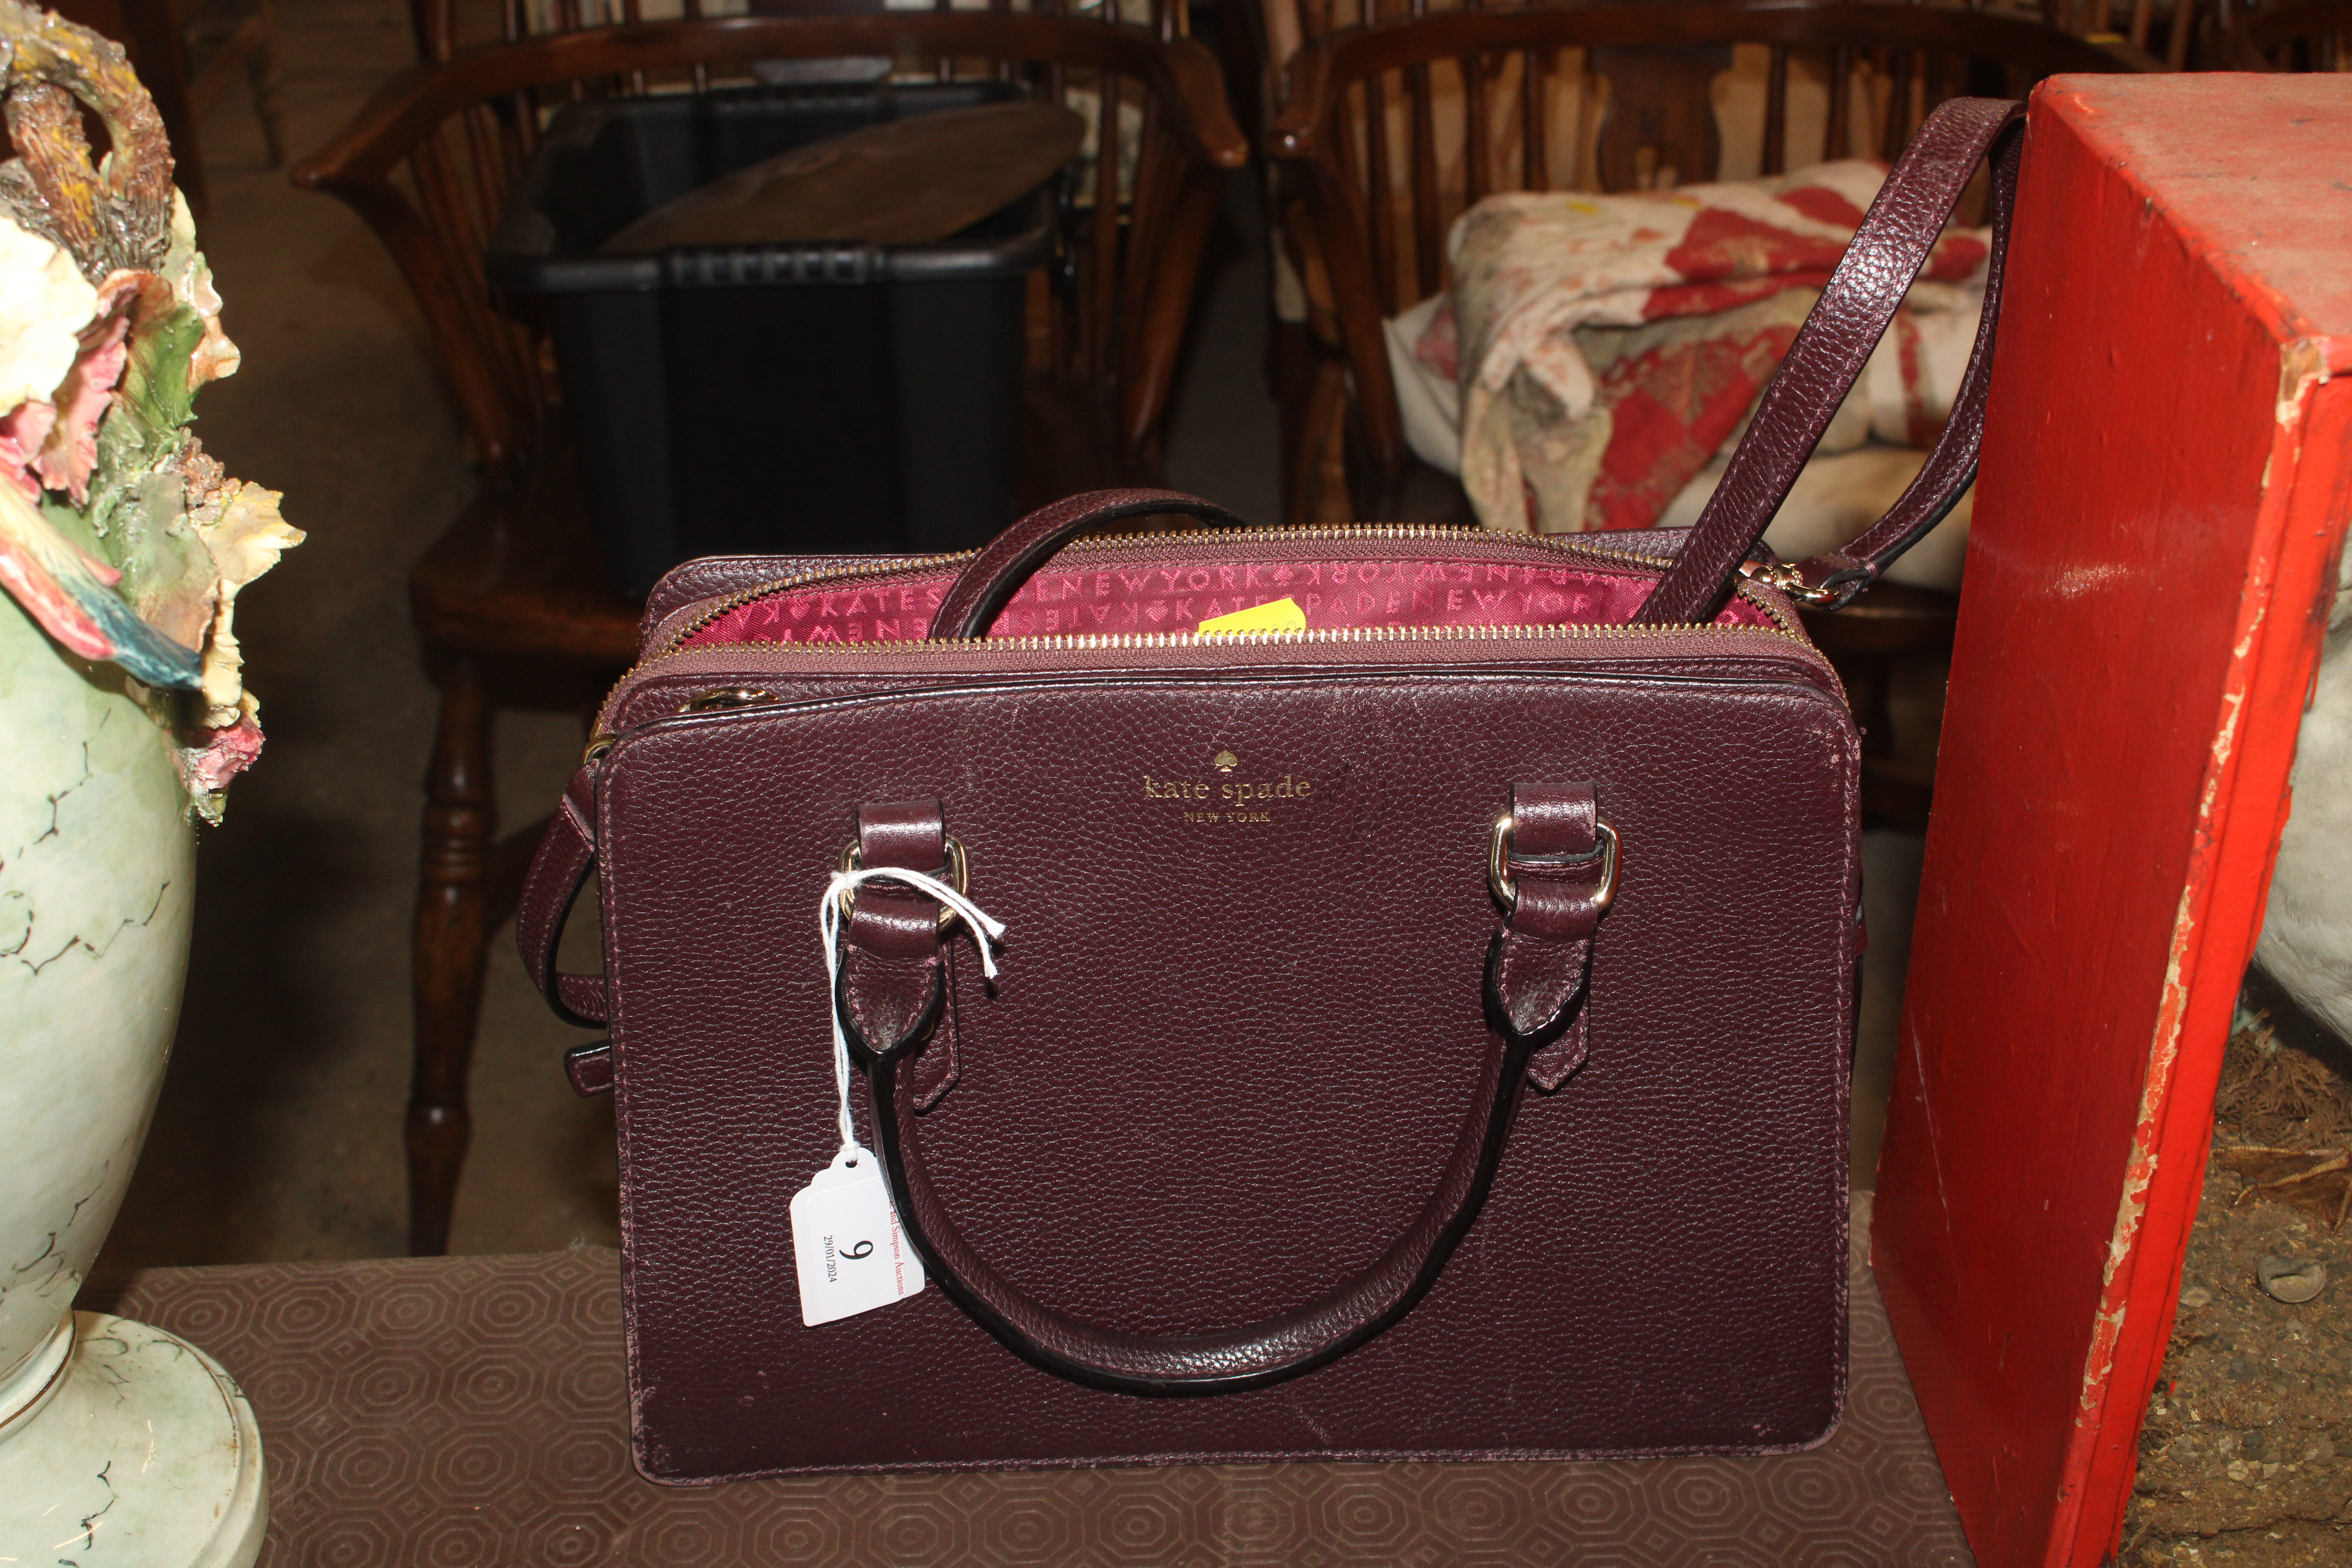 A Kate Spade burgundy handbag